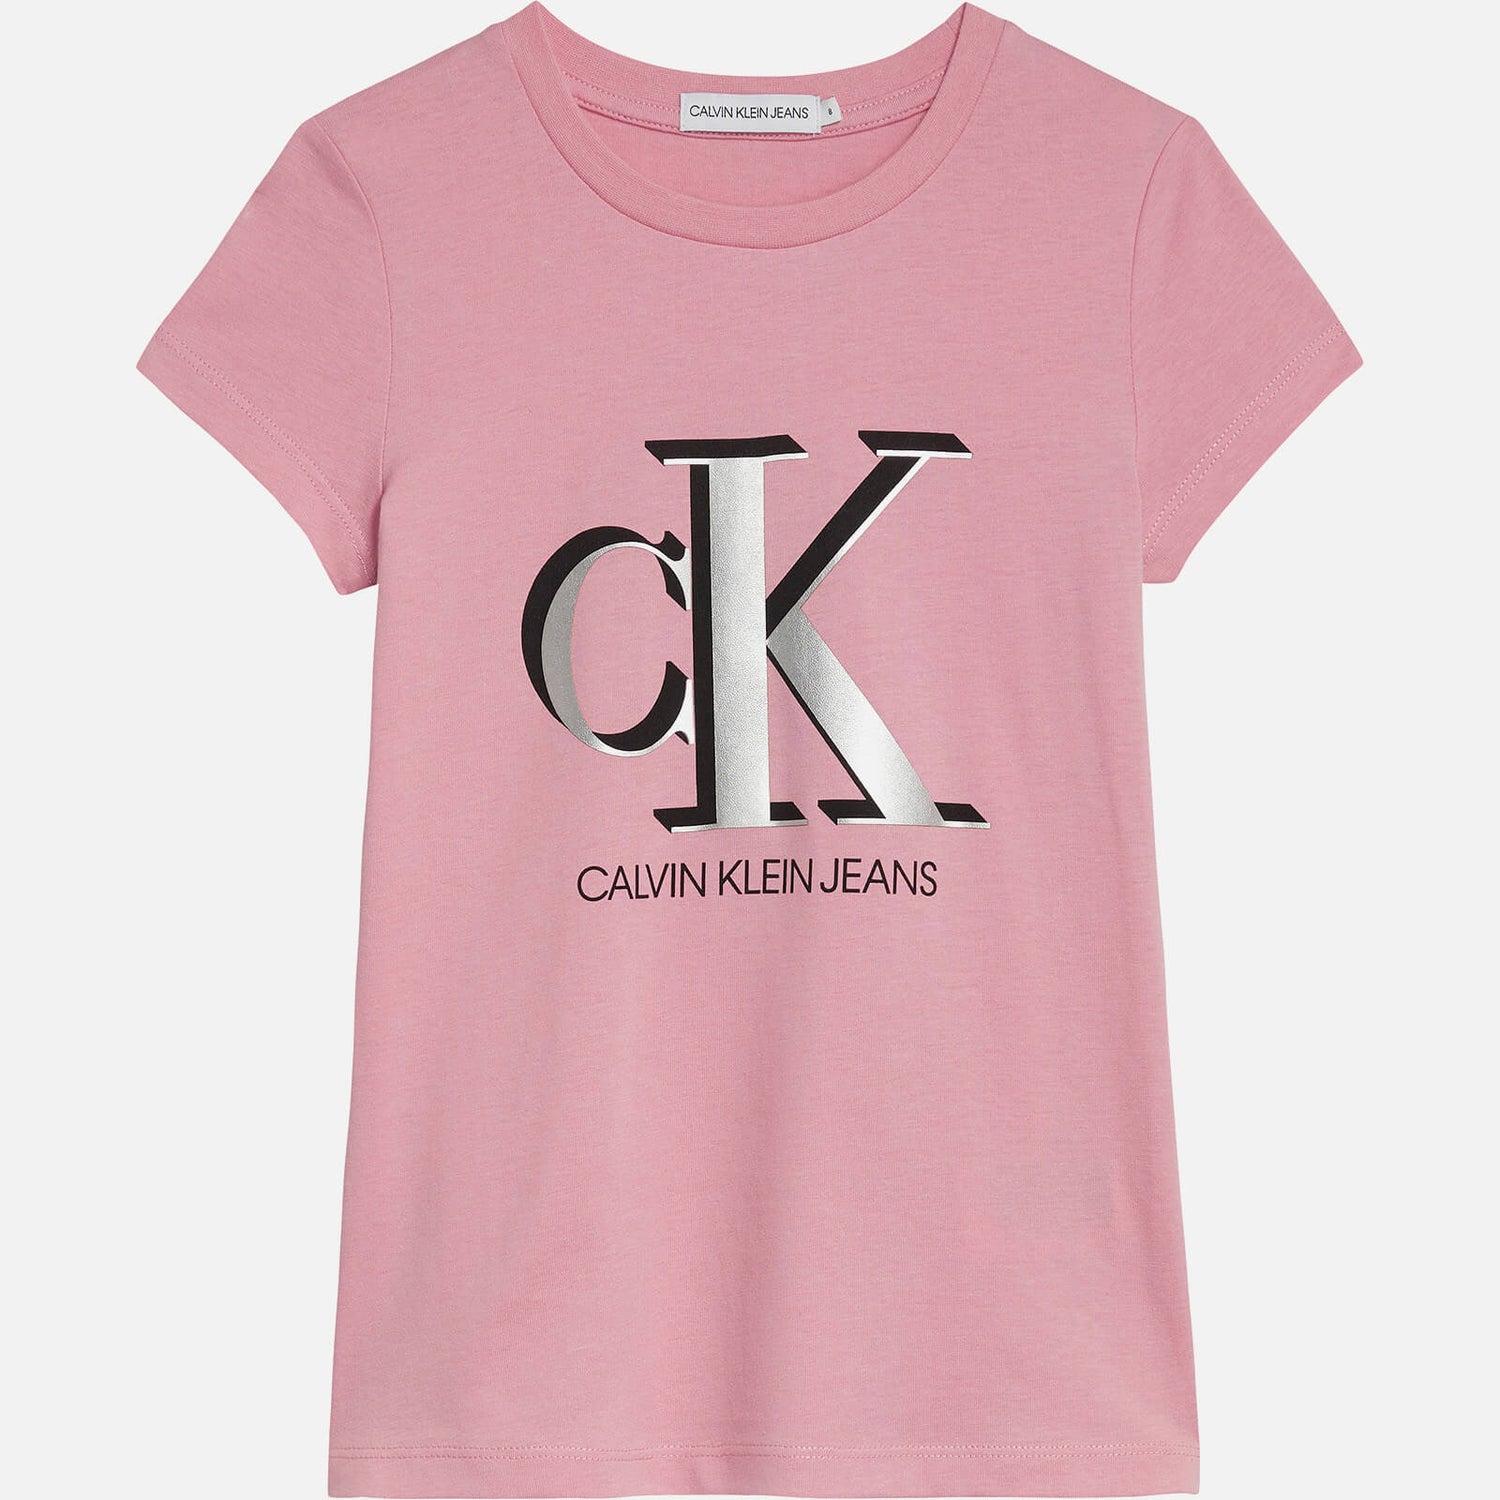 Calvin Klein Girl's Contrast Monogram T-Shirt - Soft Berry - 8 Years